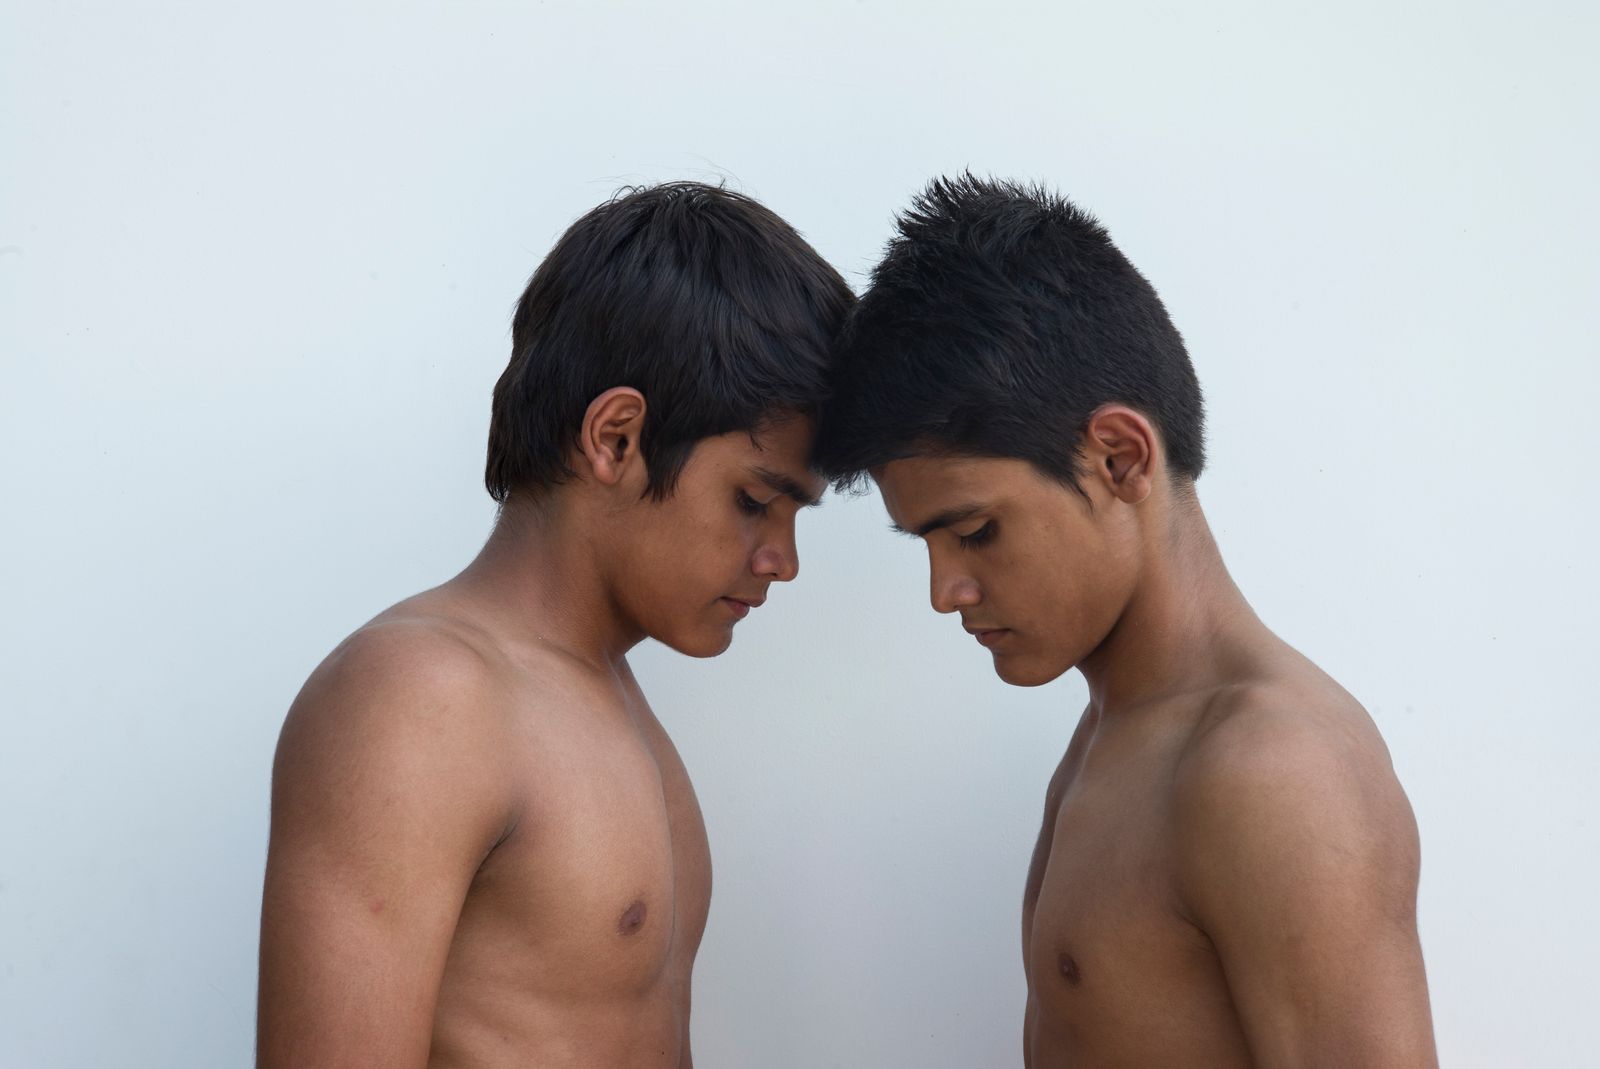 © Luis Cobelo - The Ropero twins